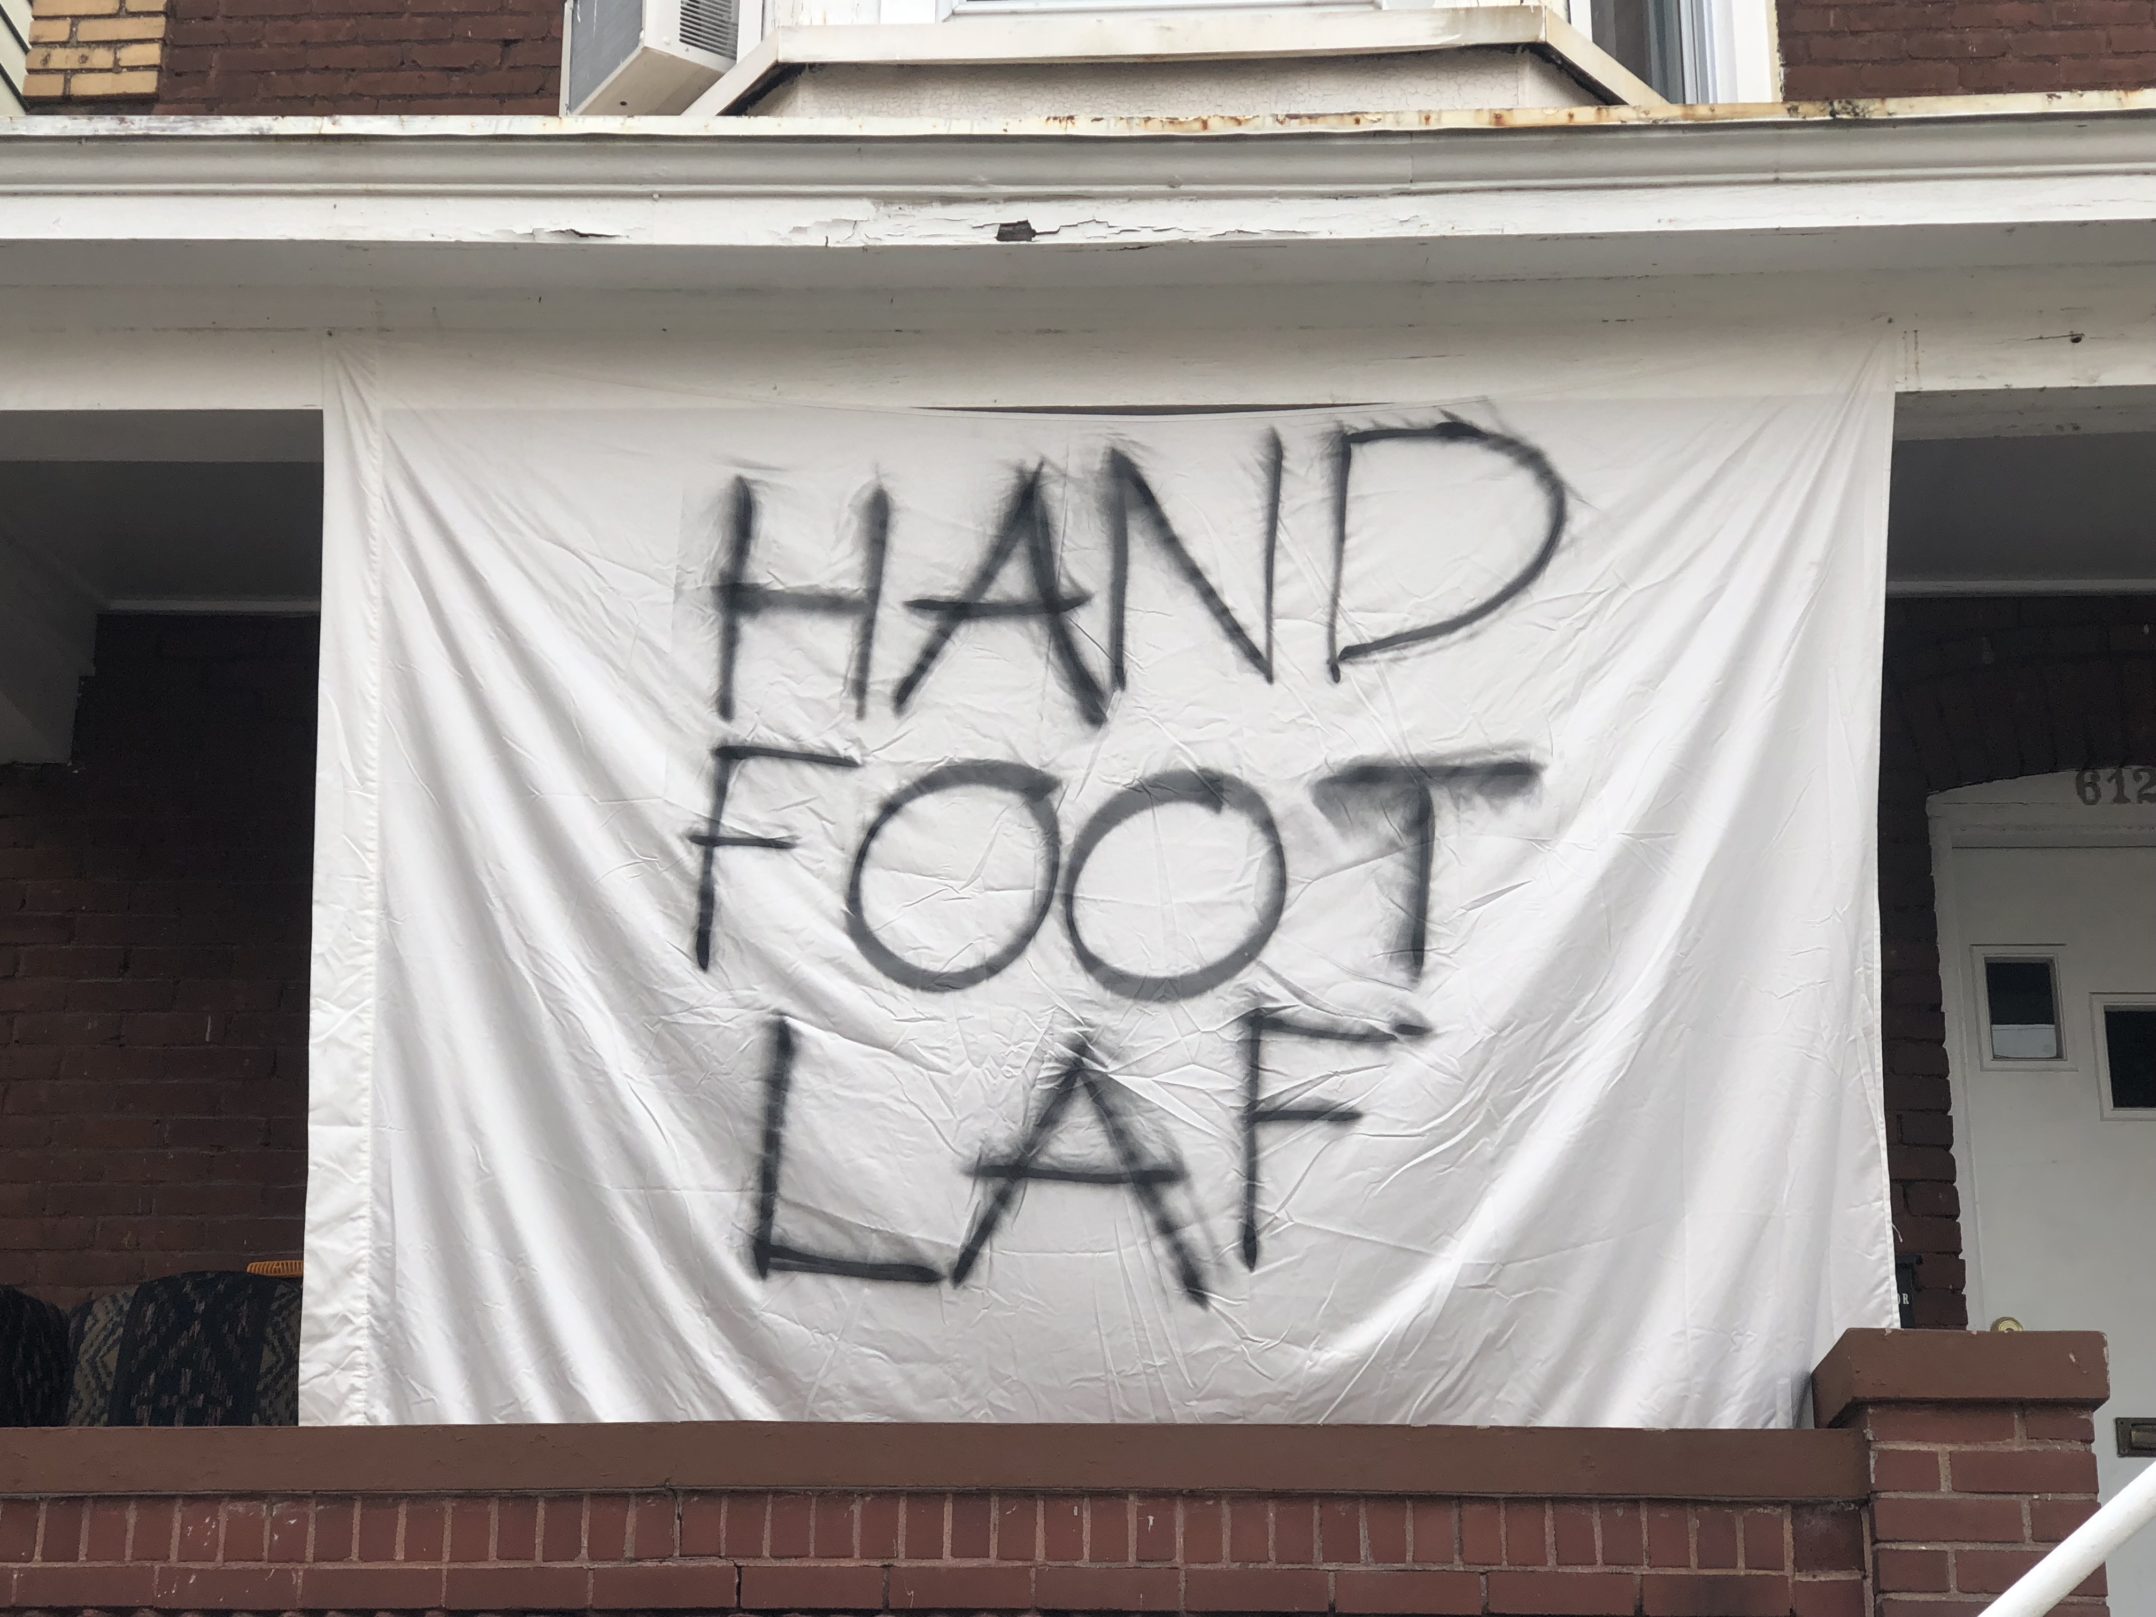 hand foot laf